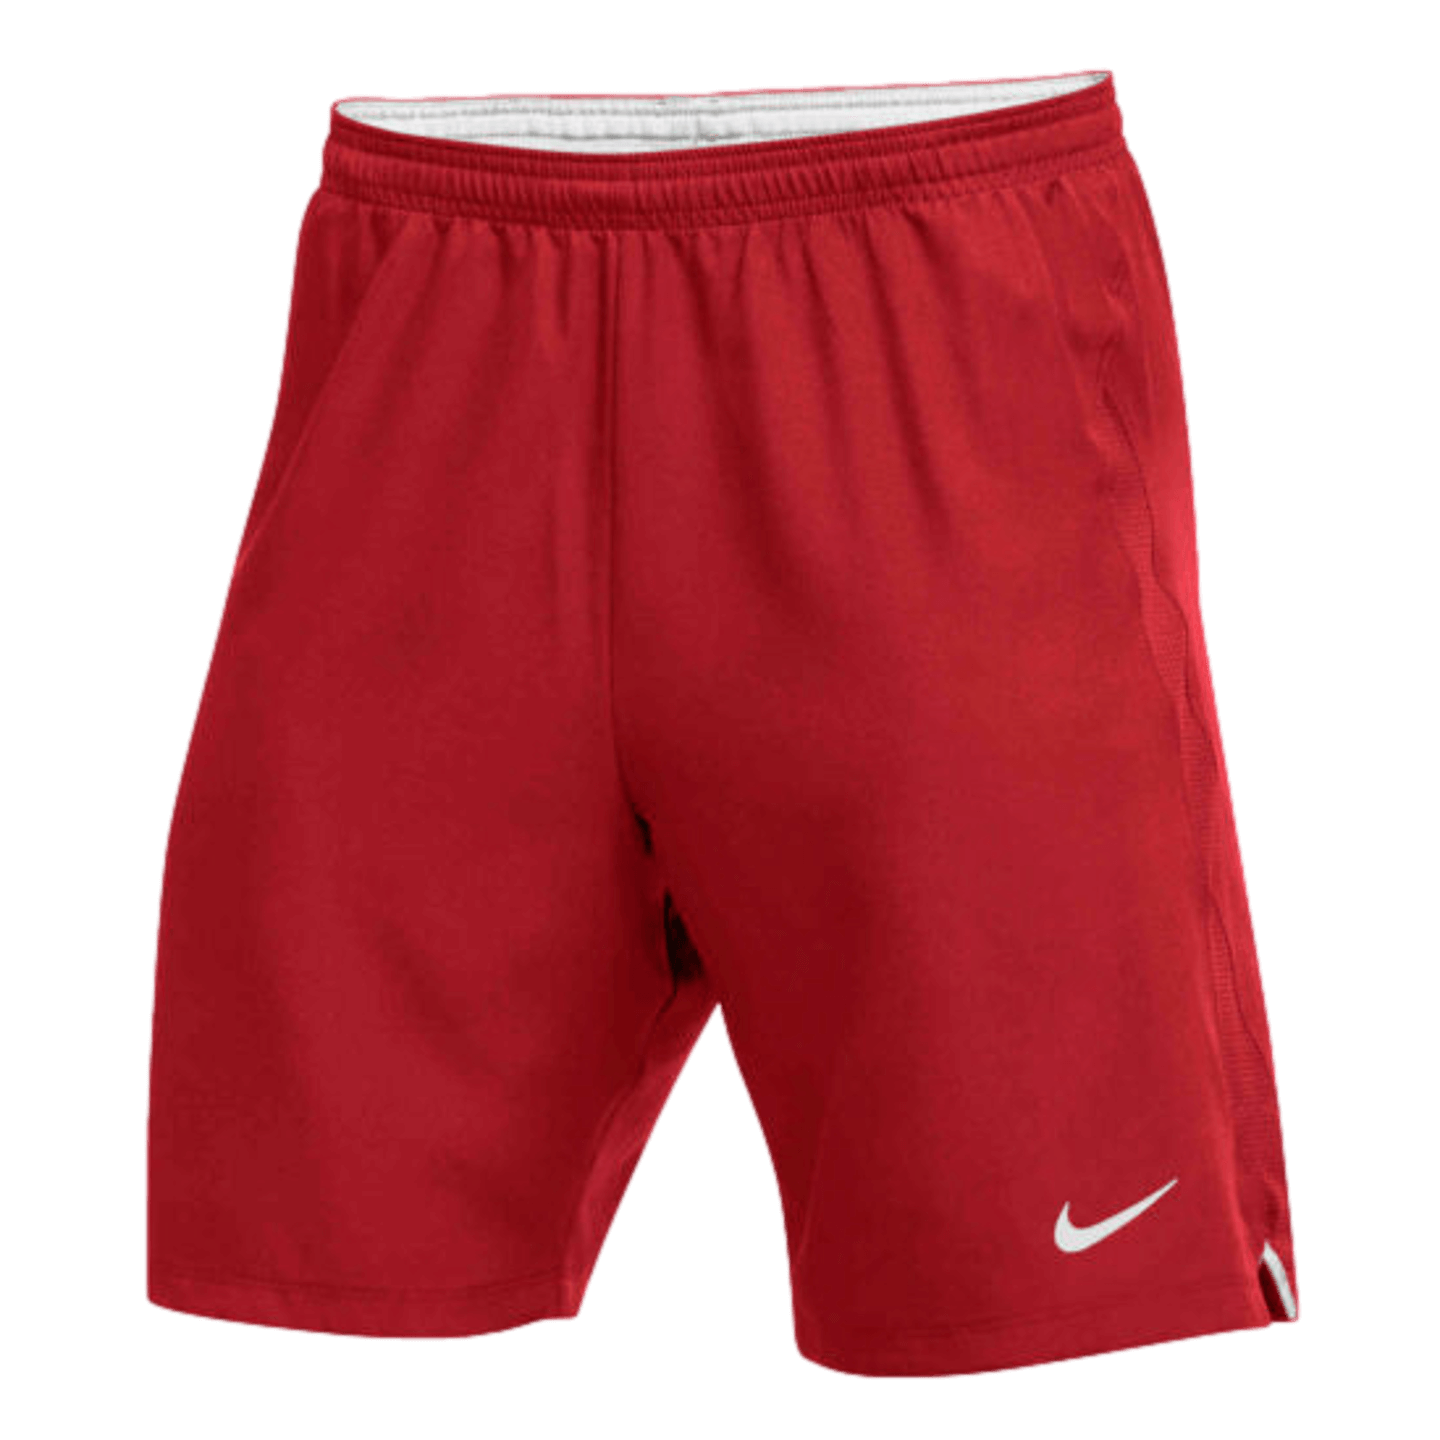 Pantalones cortos tejidos Laser IV de Nike